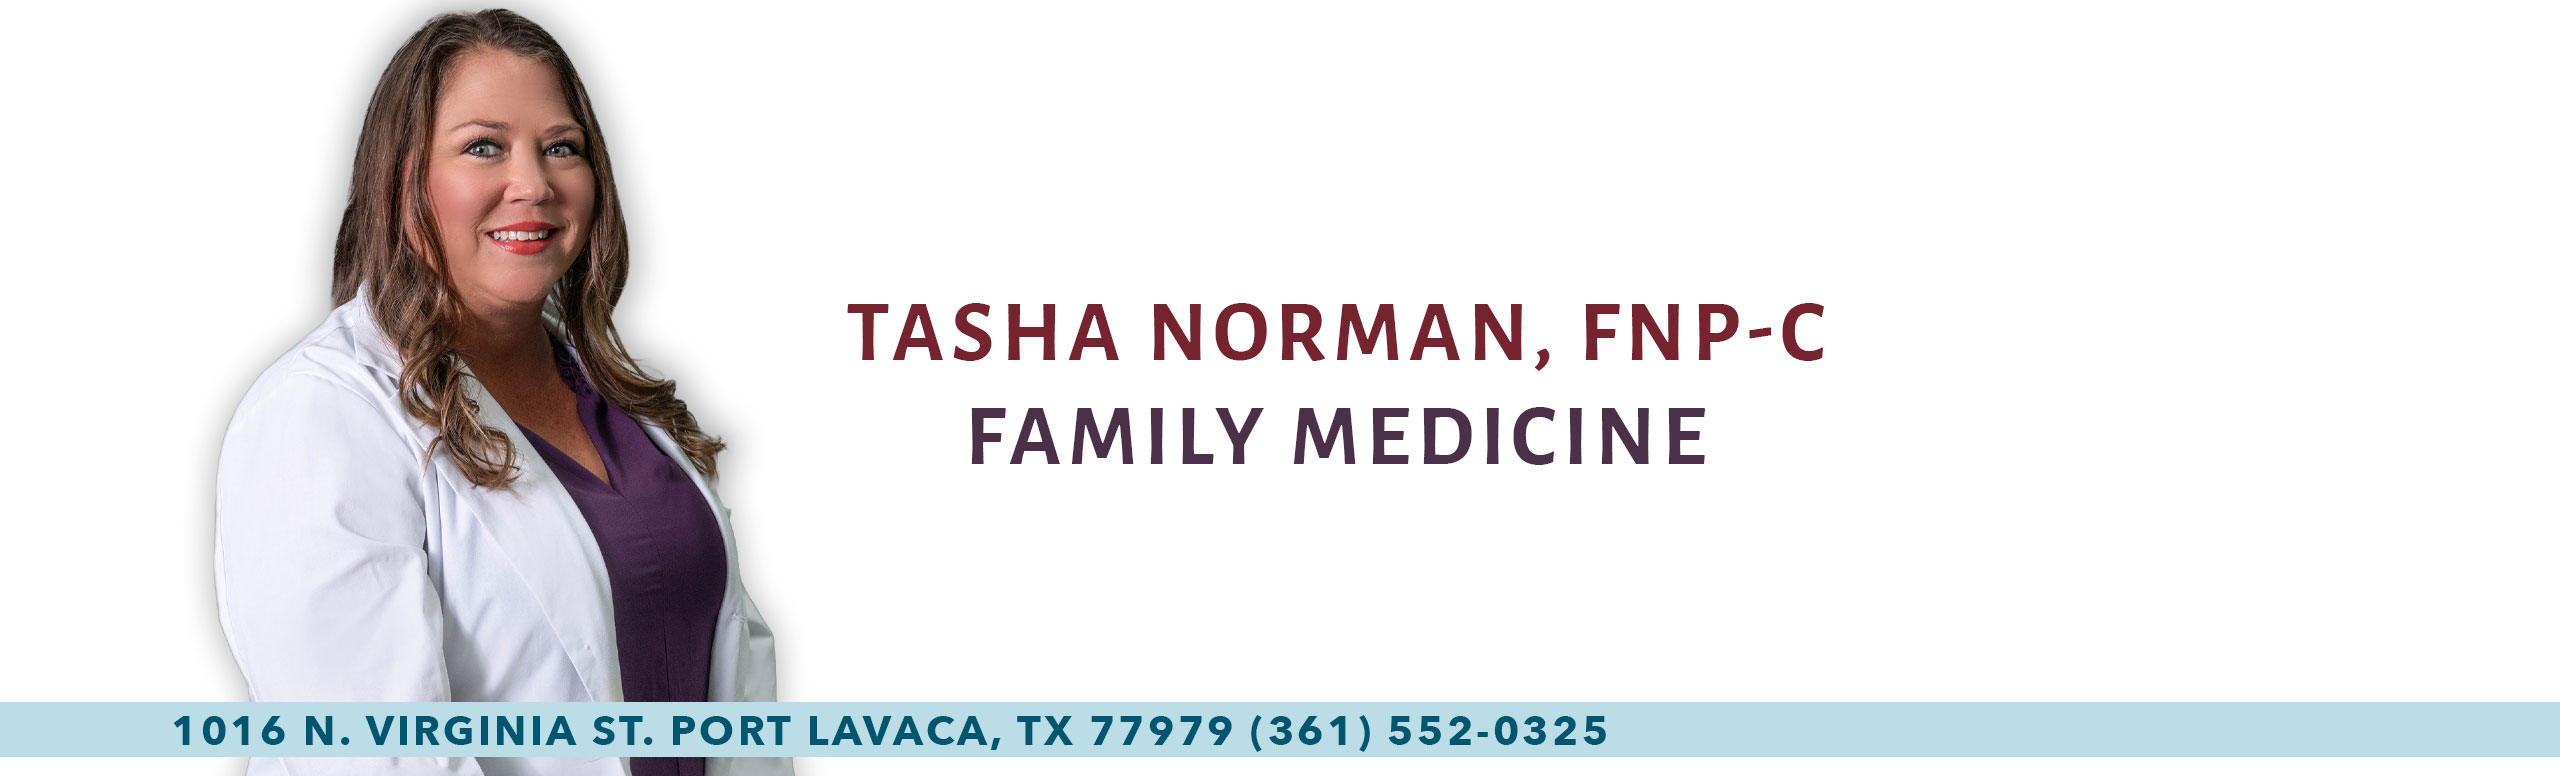 Tasha Norman, FNP-C 
Family Medicine